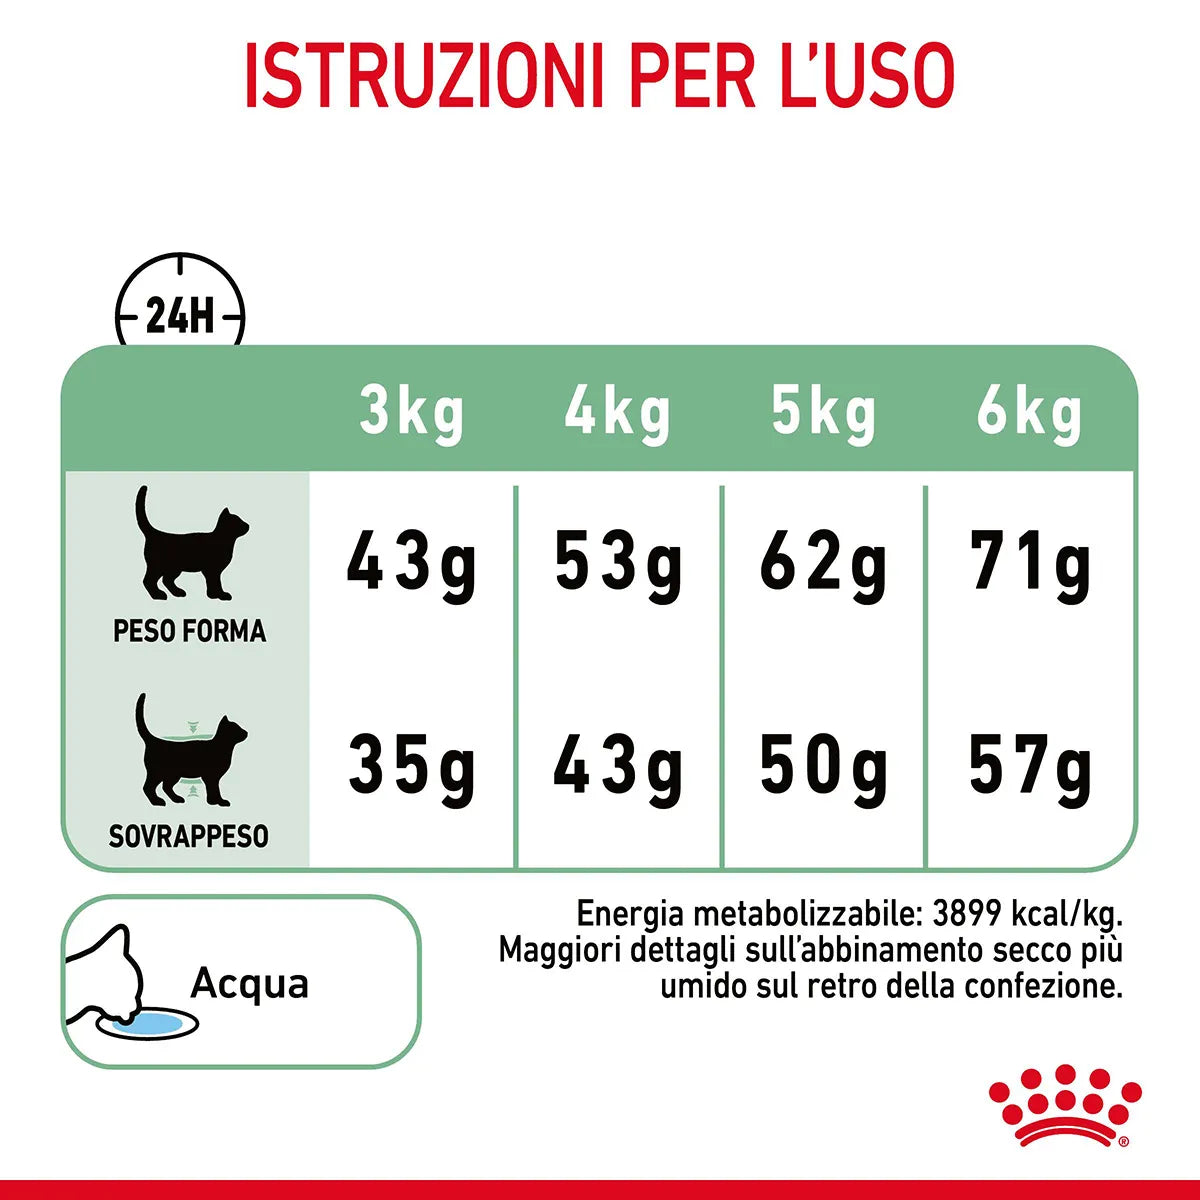 Royal Canin - Digestive Care - Gatto adulto - 2kg